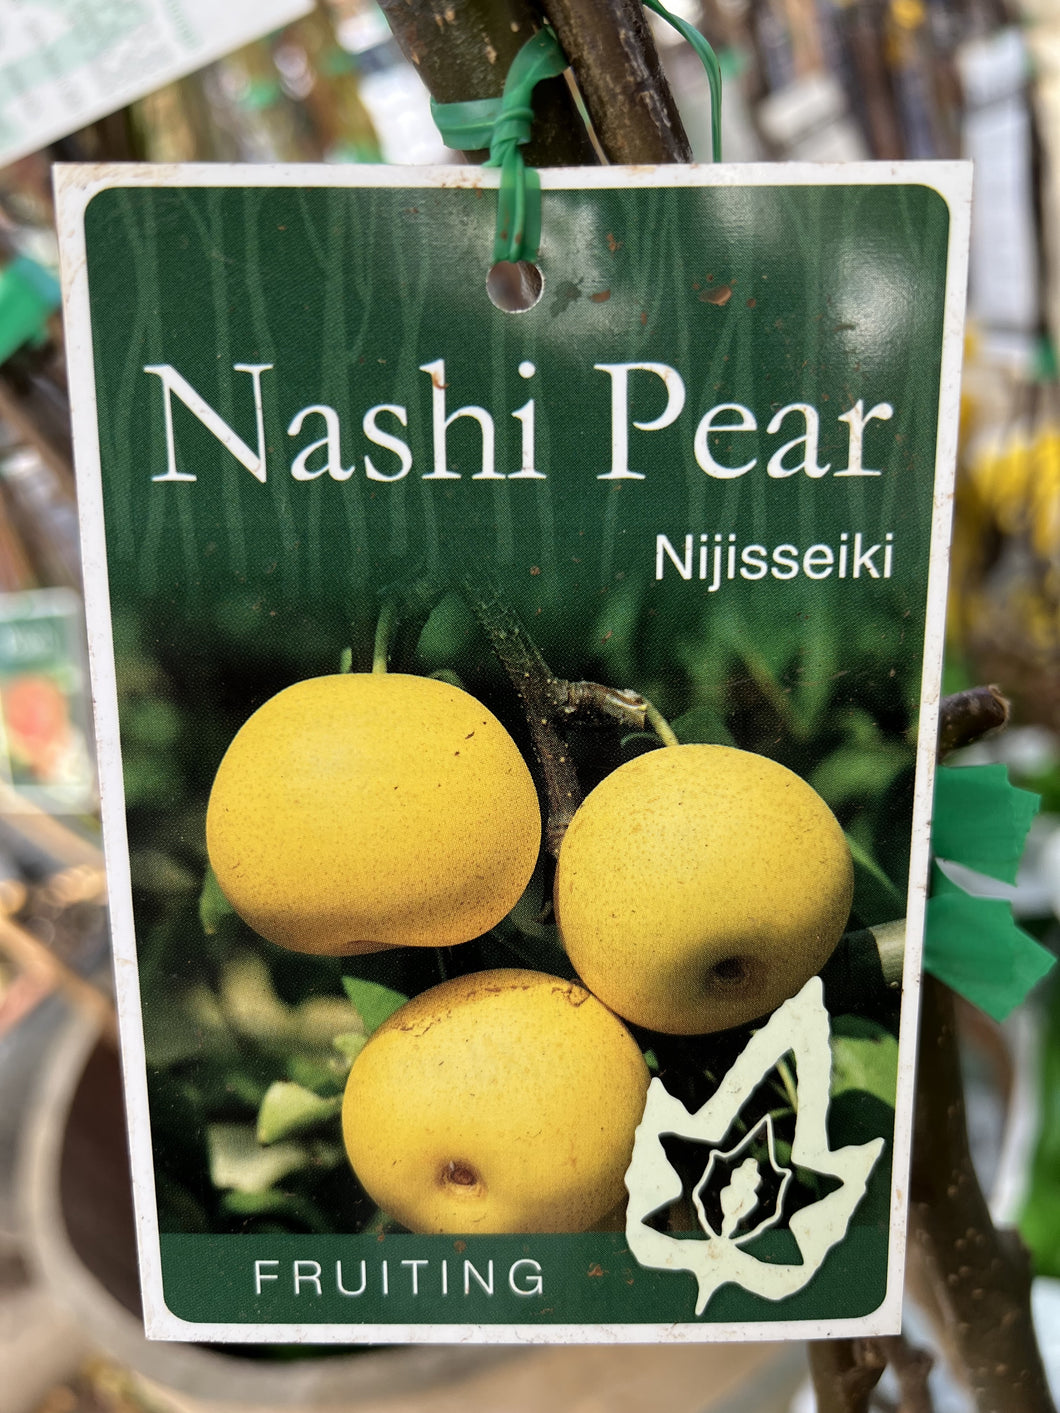 Pear Nashi 'Nijisseiki'